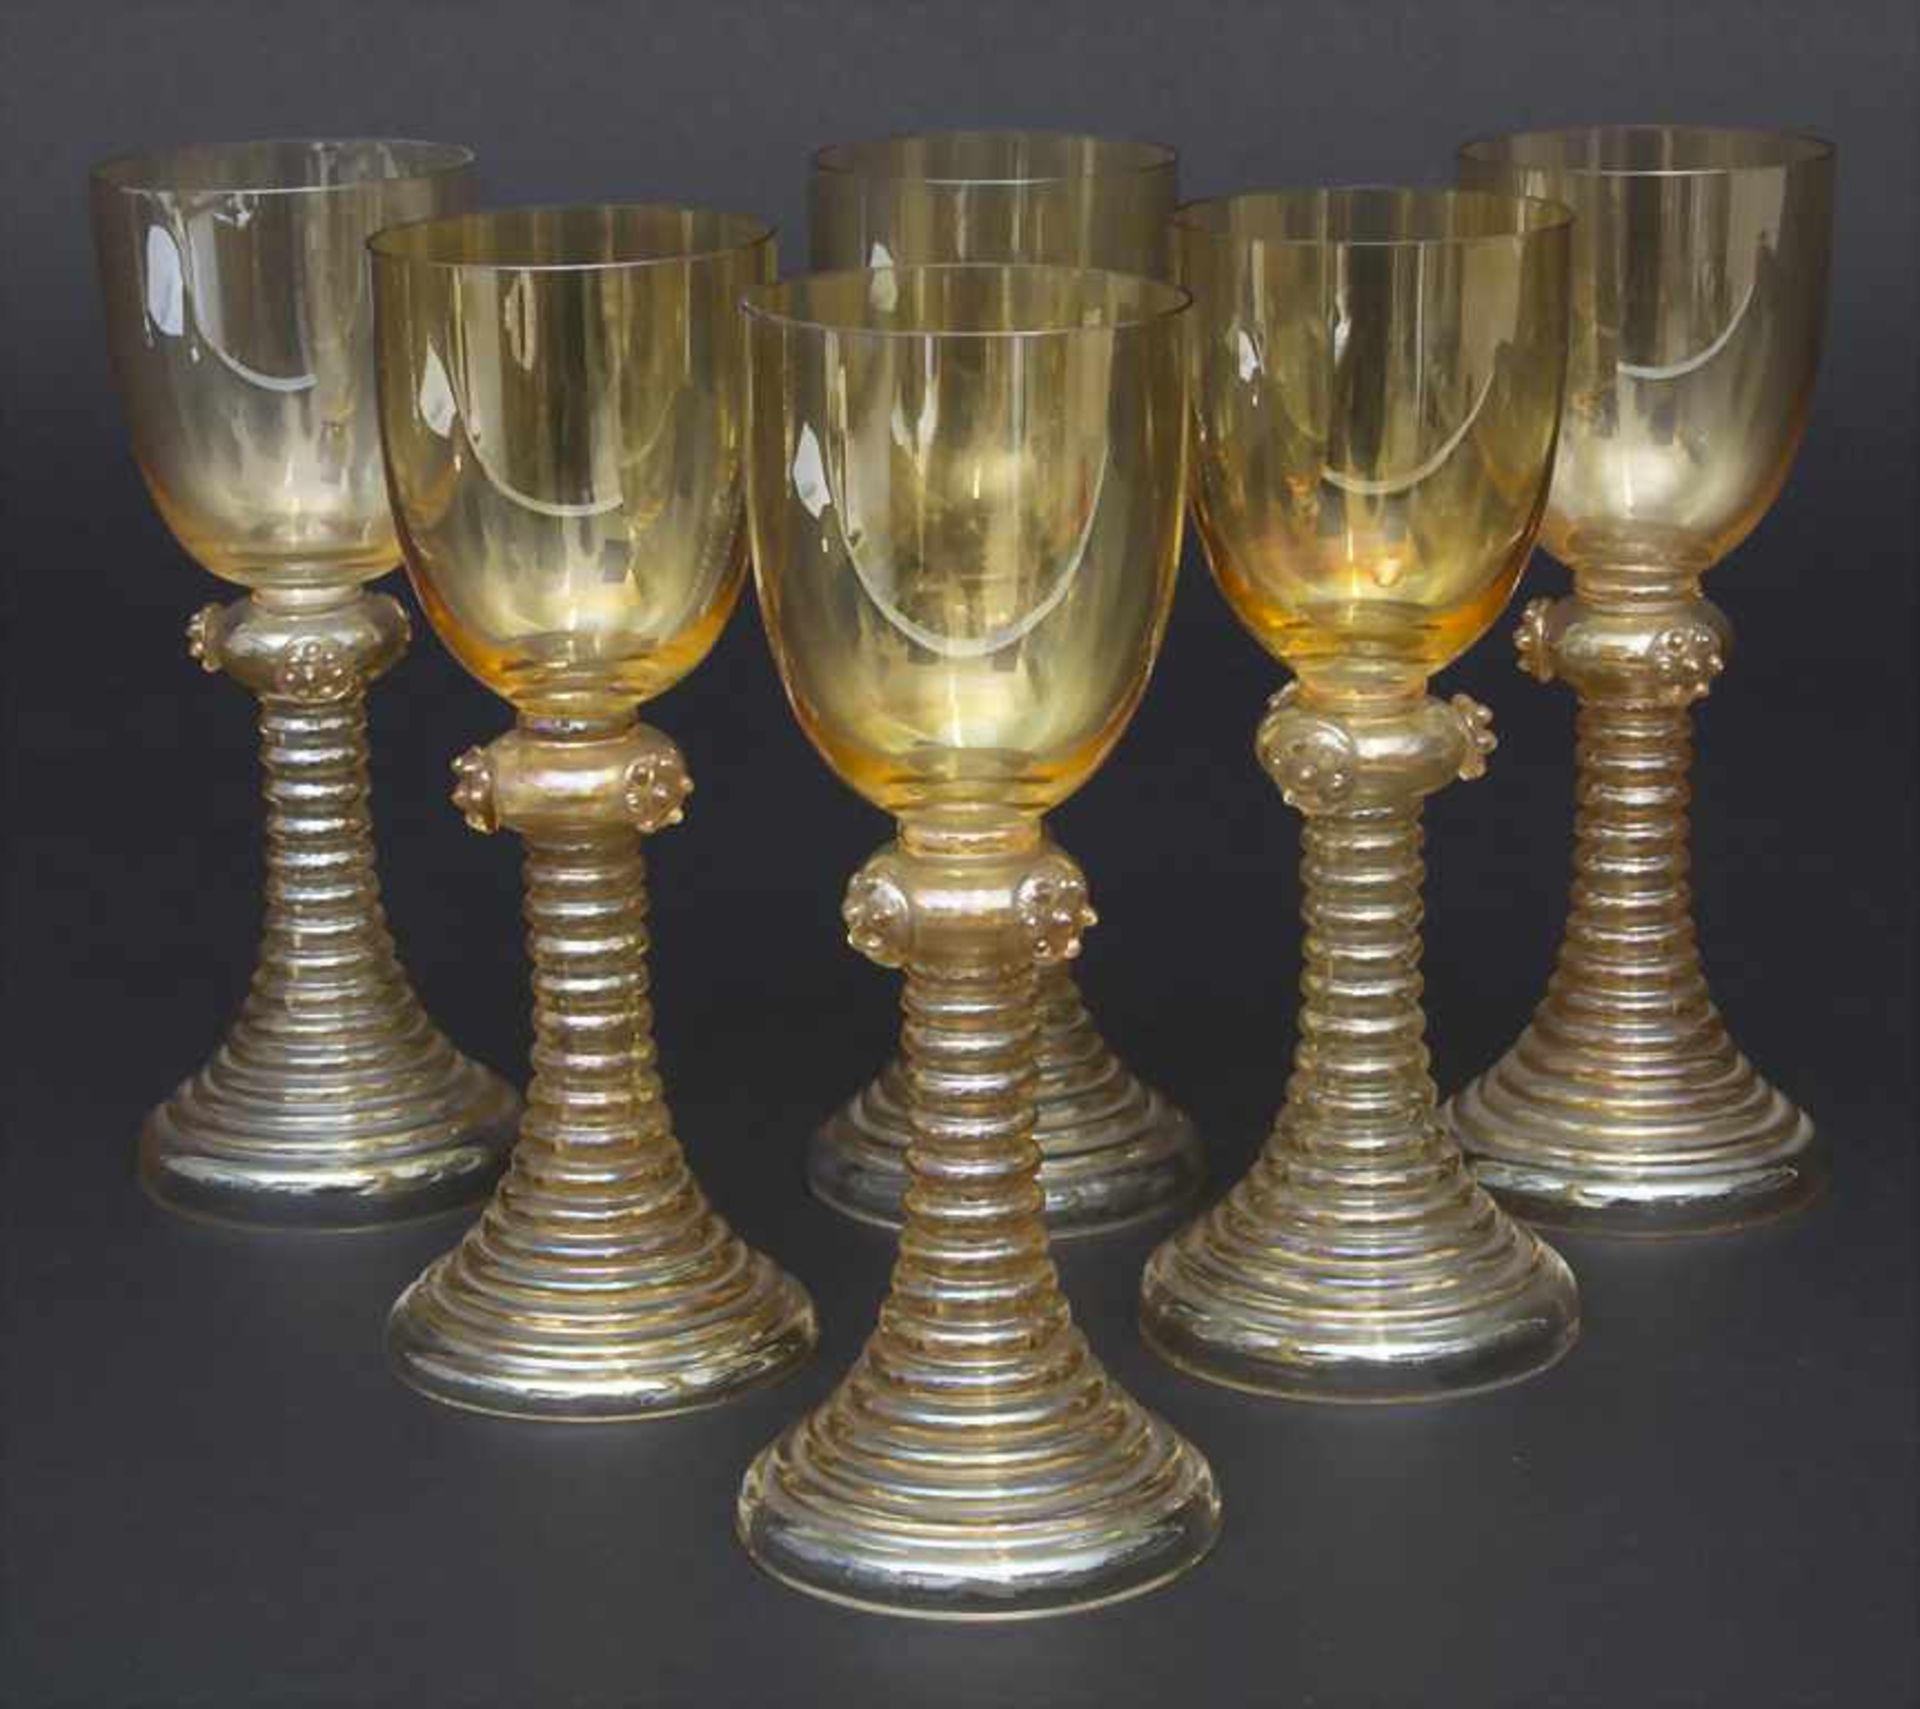 6 Weingläser / 6 wine glasses, Theresienthal, um 1920Material: Kristallglas bernsteinfarben,